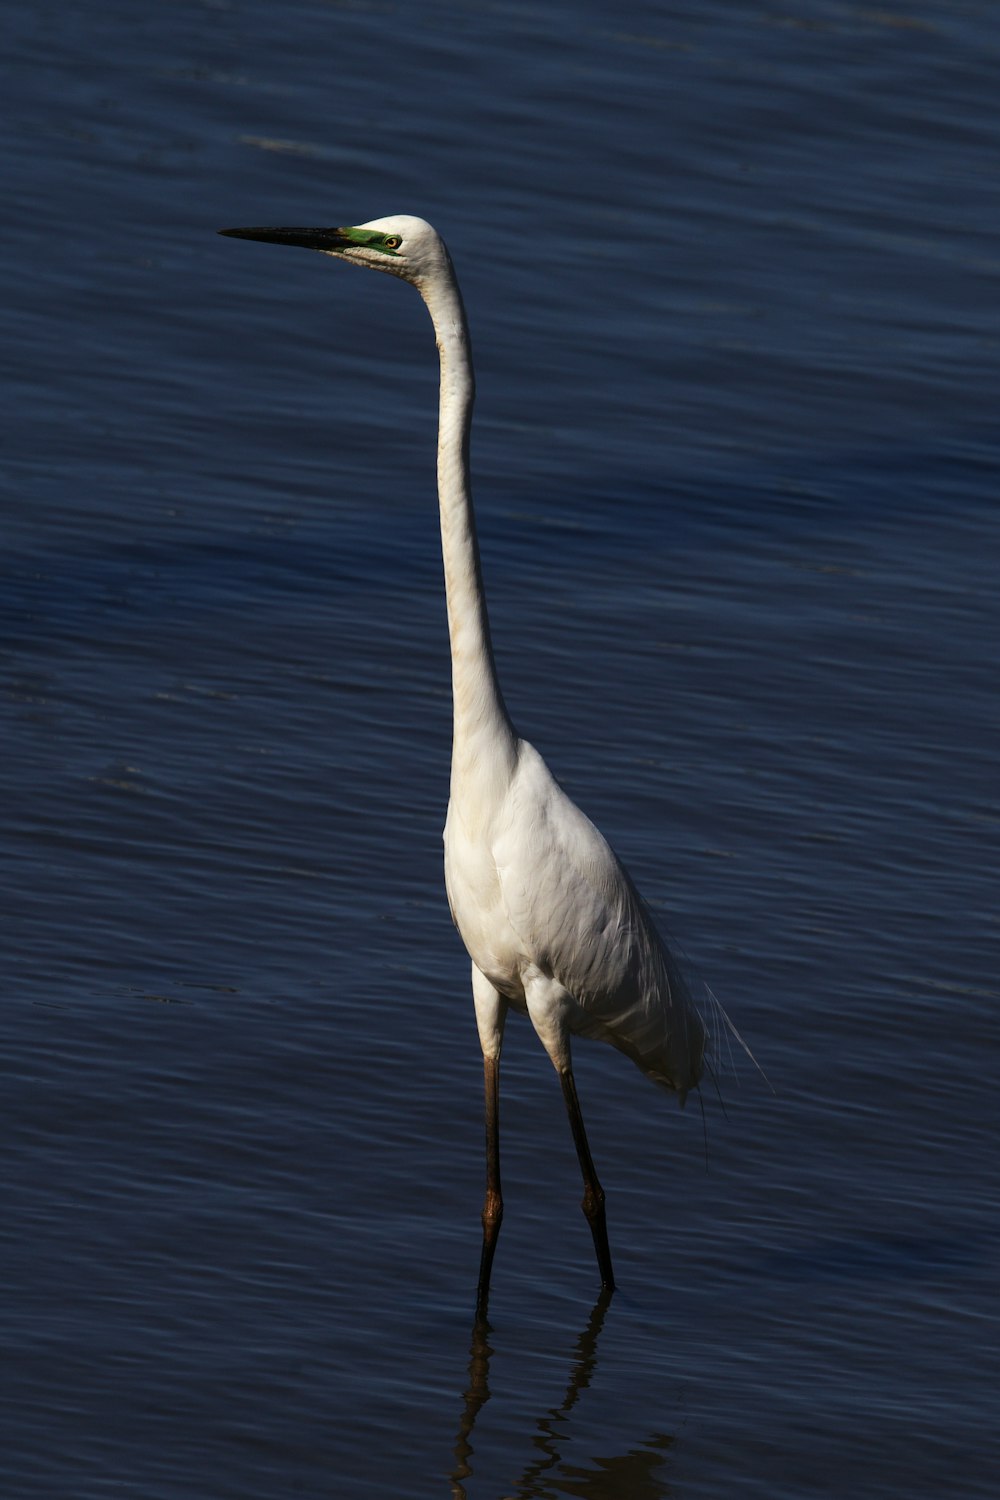 white bird on body of water during daytime